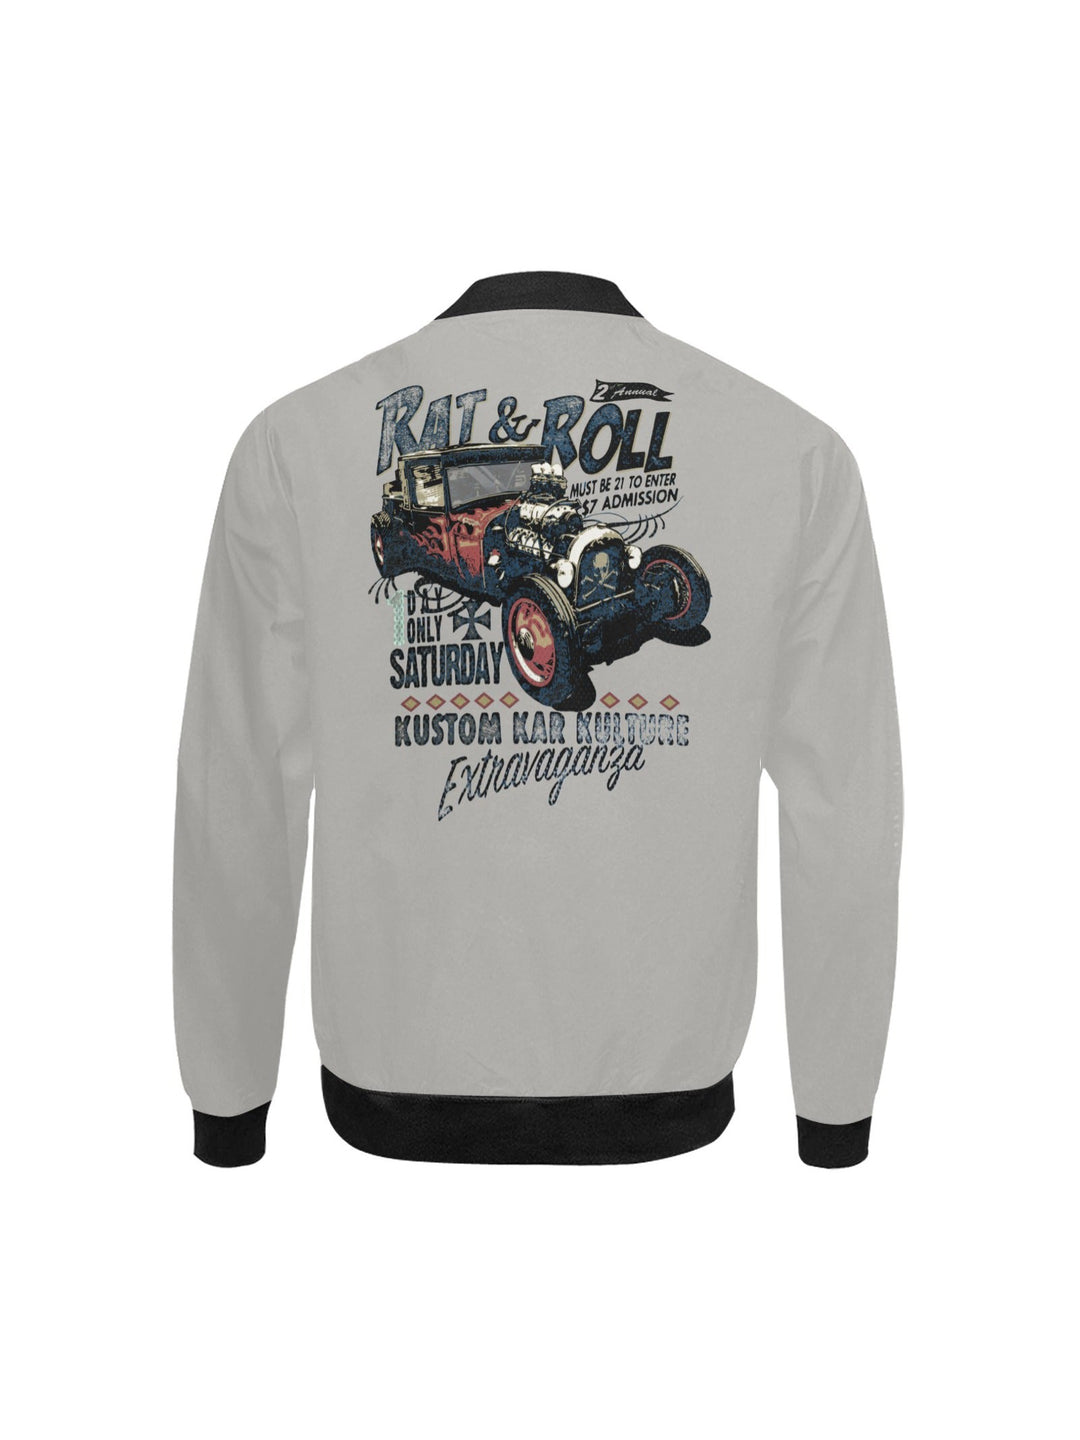 Rat & Roll Men's Bomber Jacket